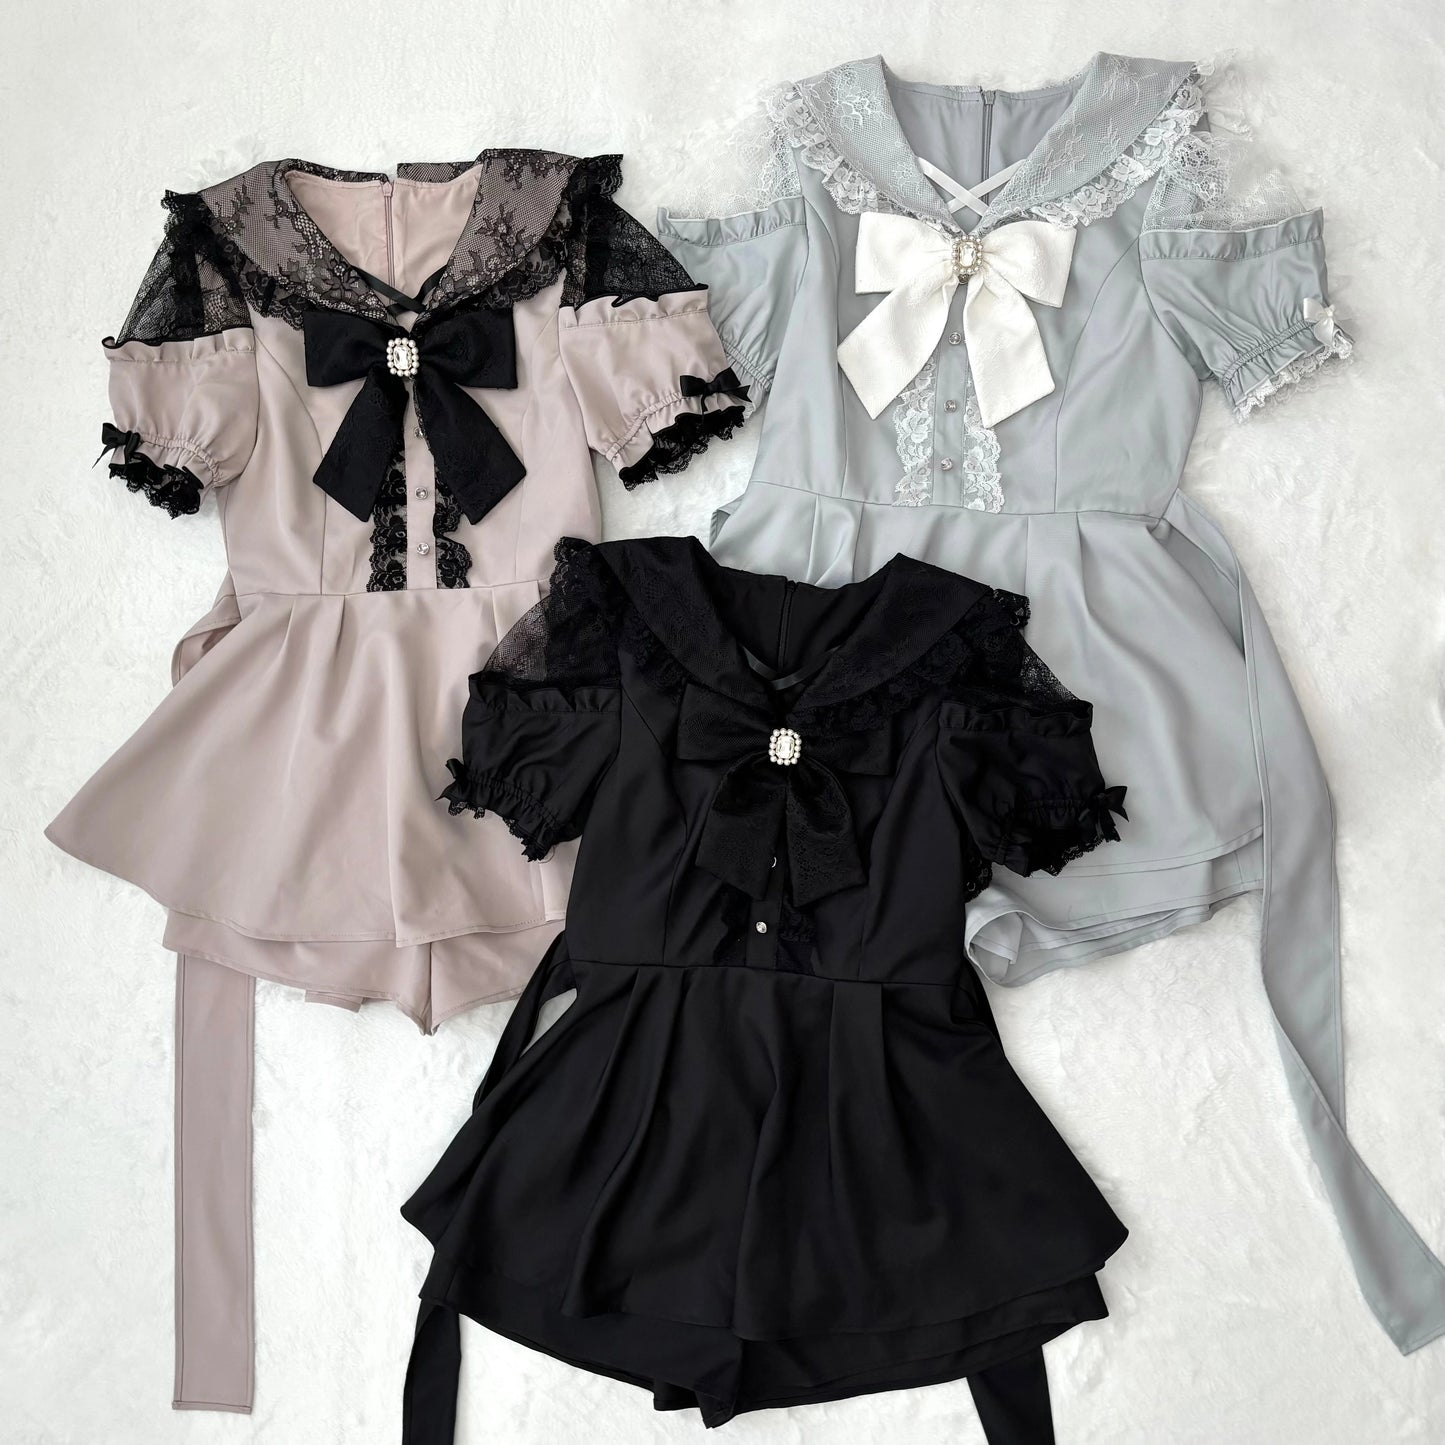 Jirai Kei Dress Set Pink Black Open-Shoulder Winged Collar Dress 37660:578008